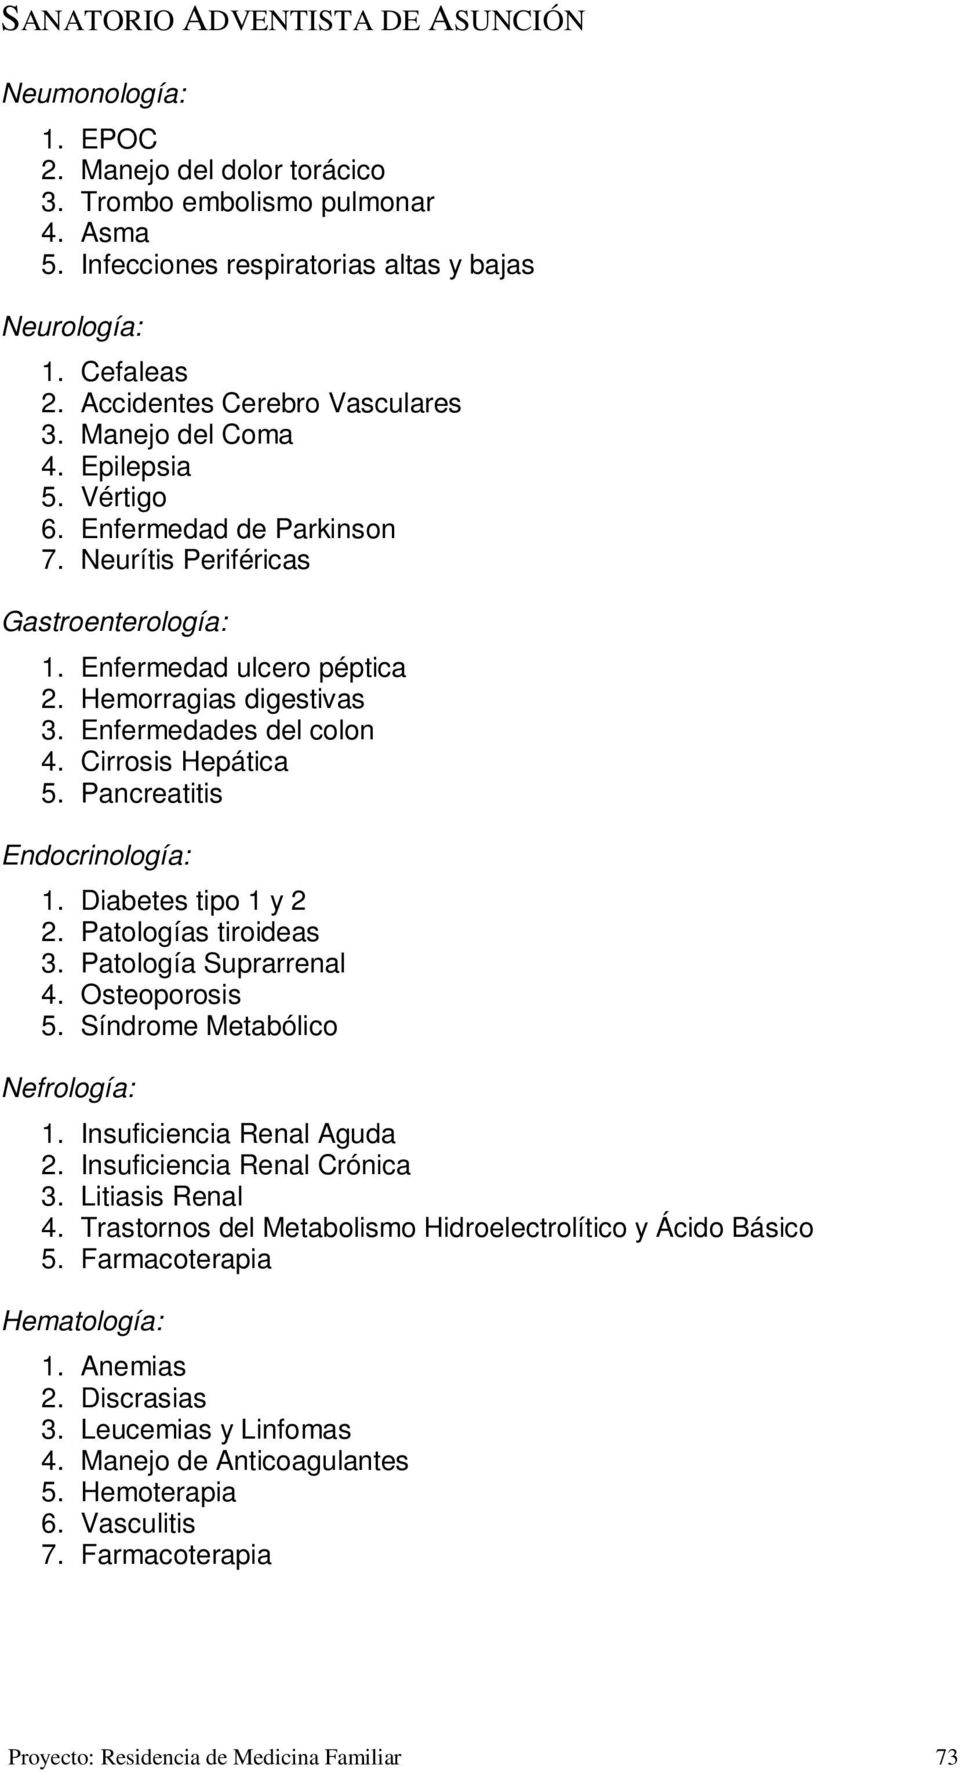 Cirrosis Hepática 5. Pancreatitis Endocrinología: 1. Diabetes tipo 1 y 2 2. Patologías tiroideas 3. Patología Suprarrenal 4. Osteoporosis 5. Síndrome Metabólico Nefrología: 1.